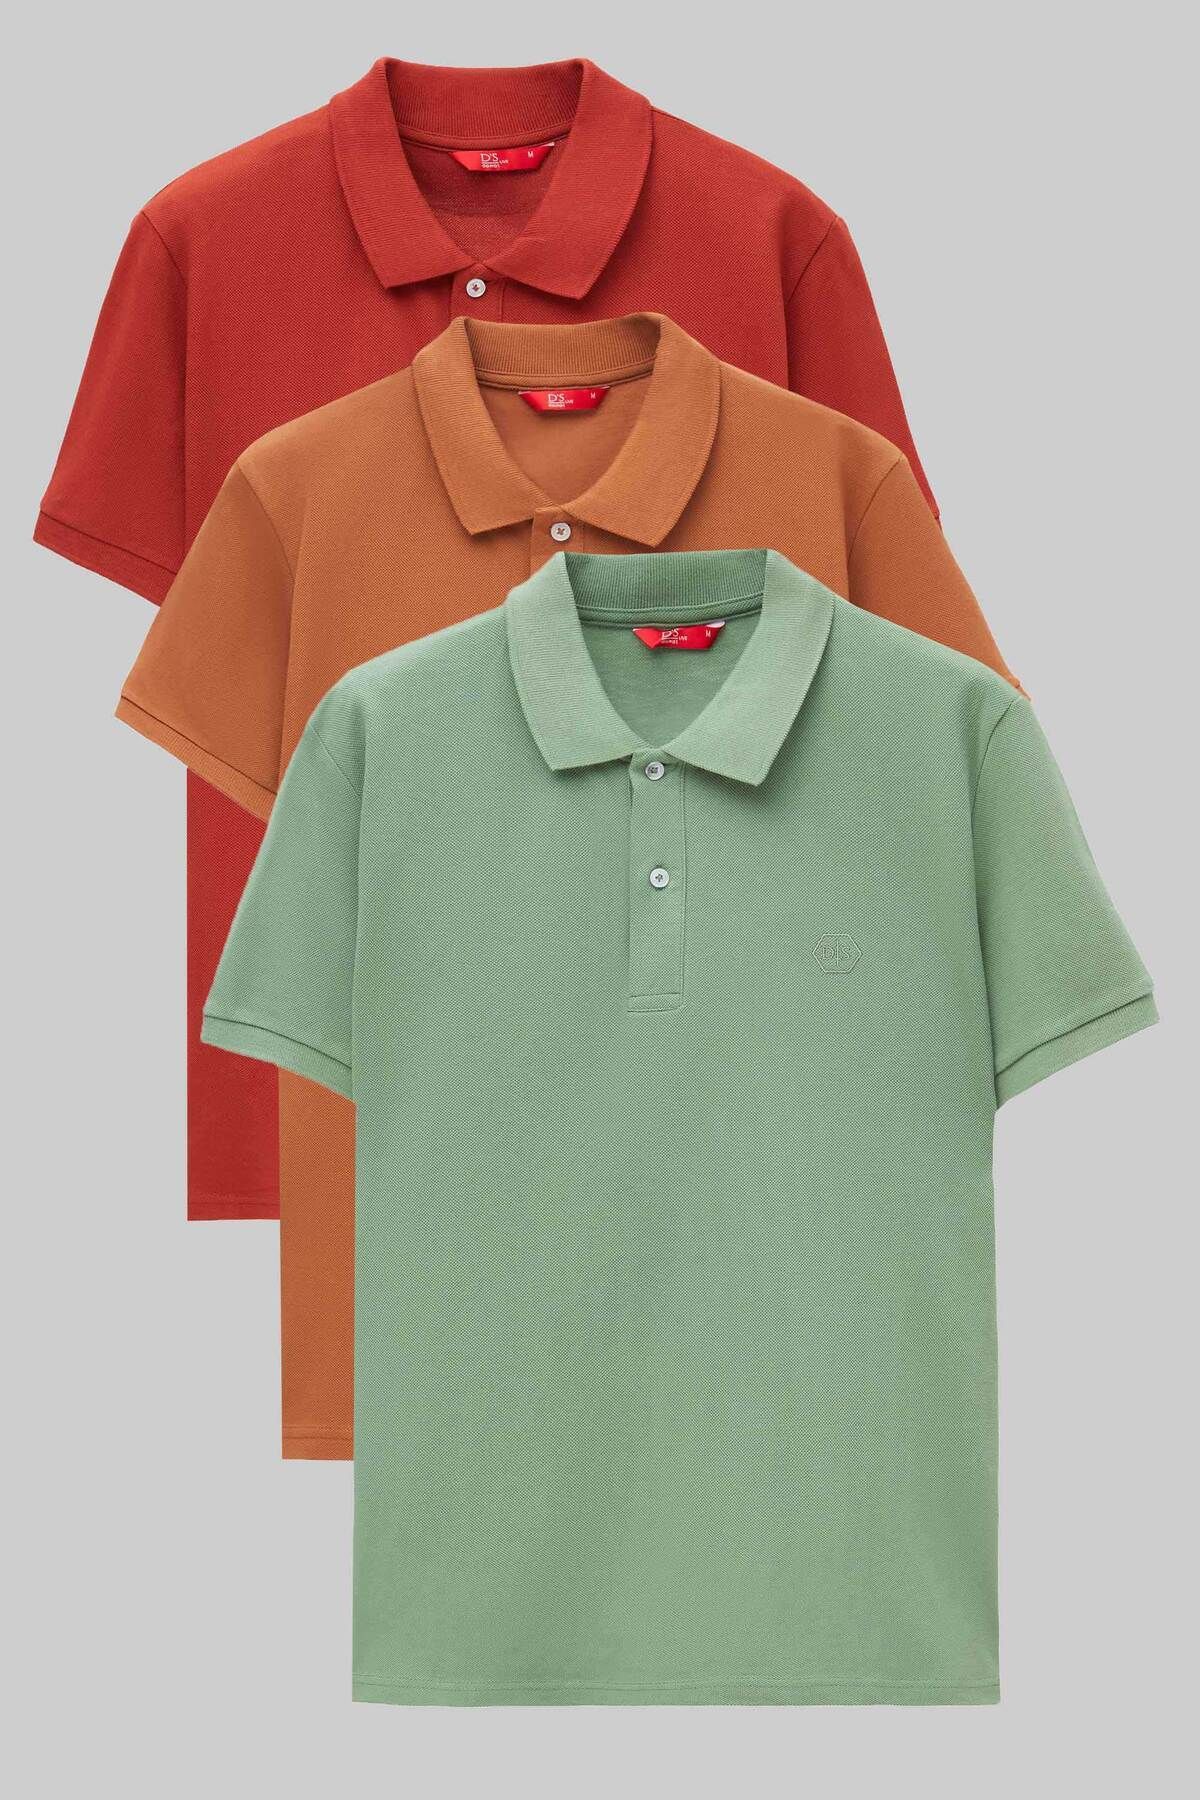 D'S Damat Ds Damat Regular Fit Kiremit/Tütün/Açık Yeşil Pike Dokulu %100 Pamuk Polo Yaka T-Shirt